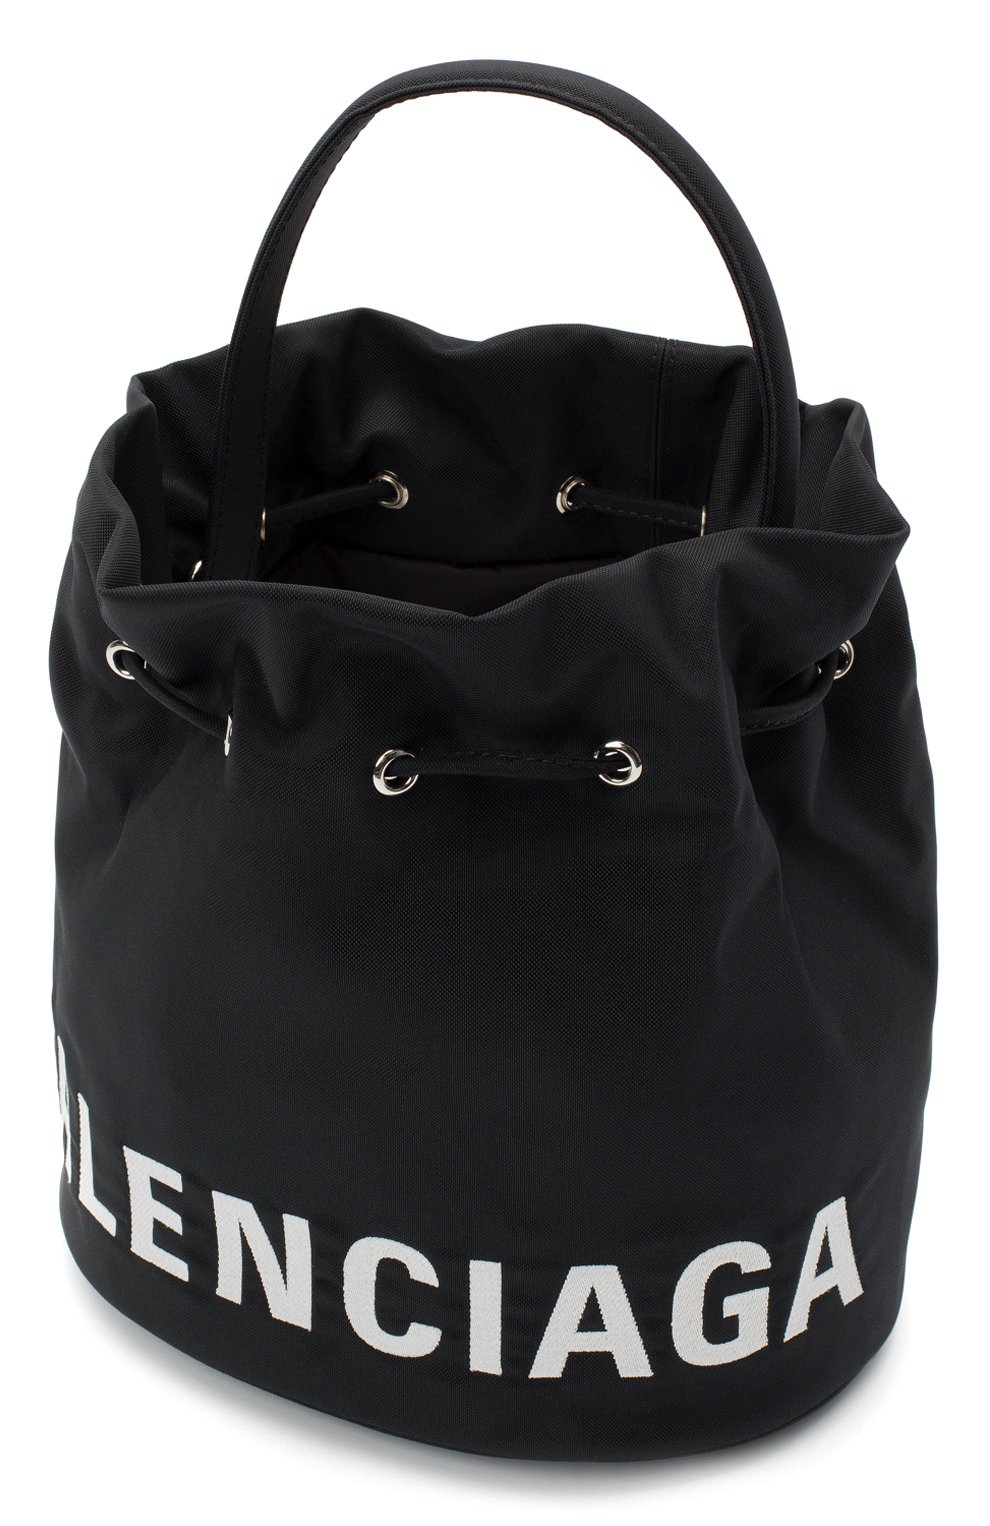 BALENCIAGA: Wheel Drawst bag with logo - Black  Balenciaga shoulder bag  619459 H852N online at